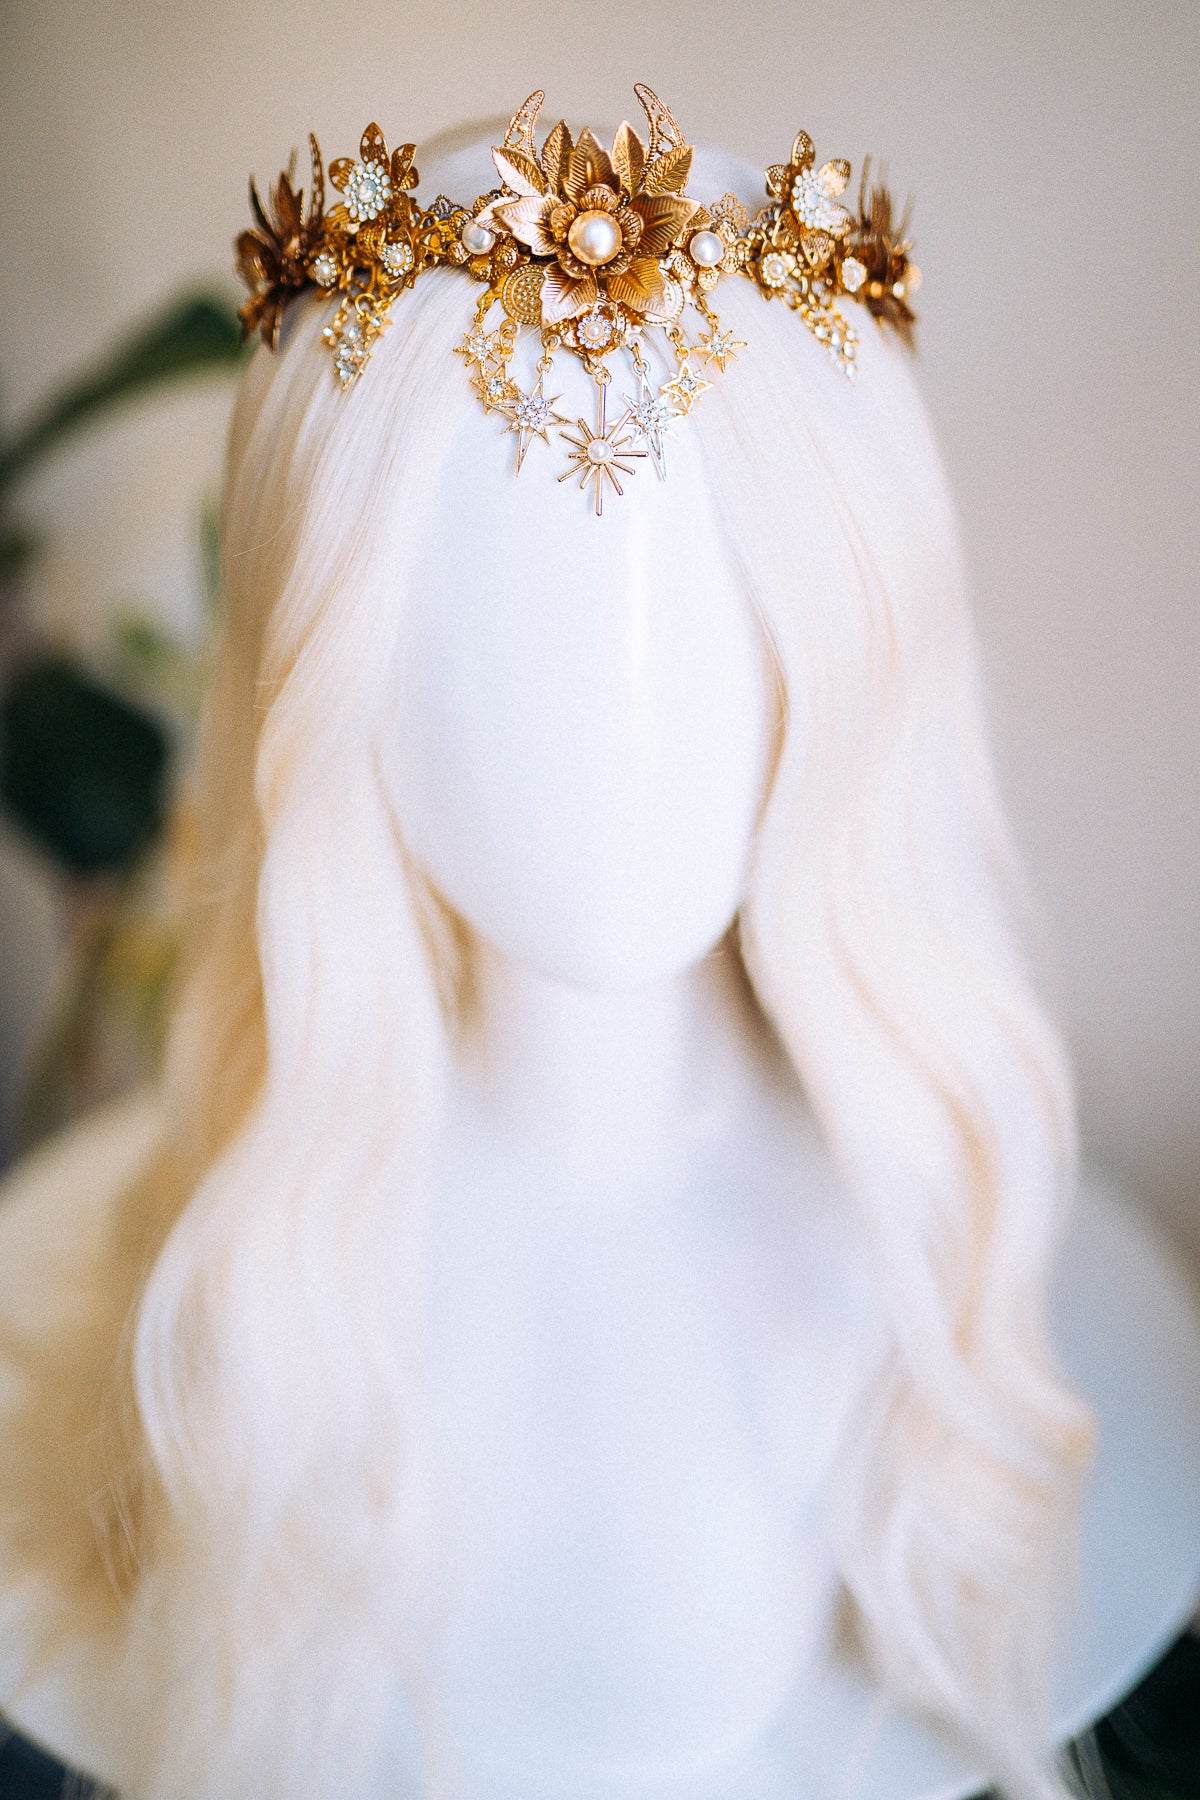 Beige Flower Crown Celestial Gold Wedding Tiara – CARBICKOVA CROWNS